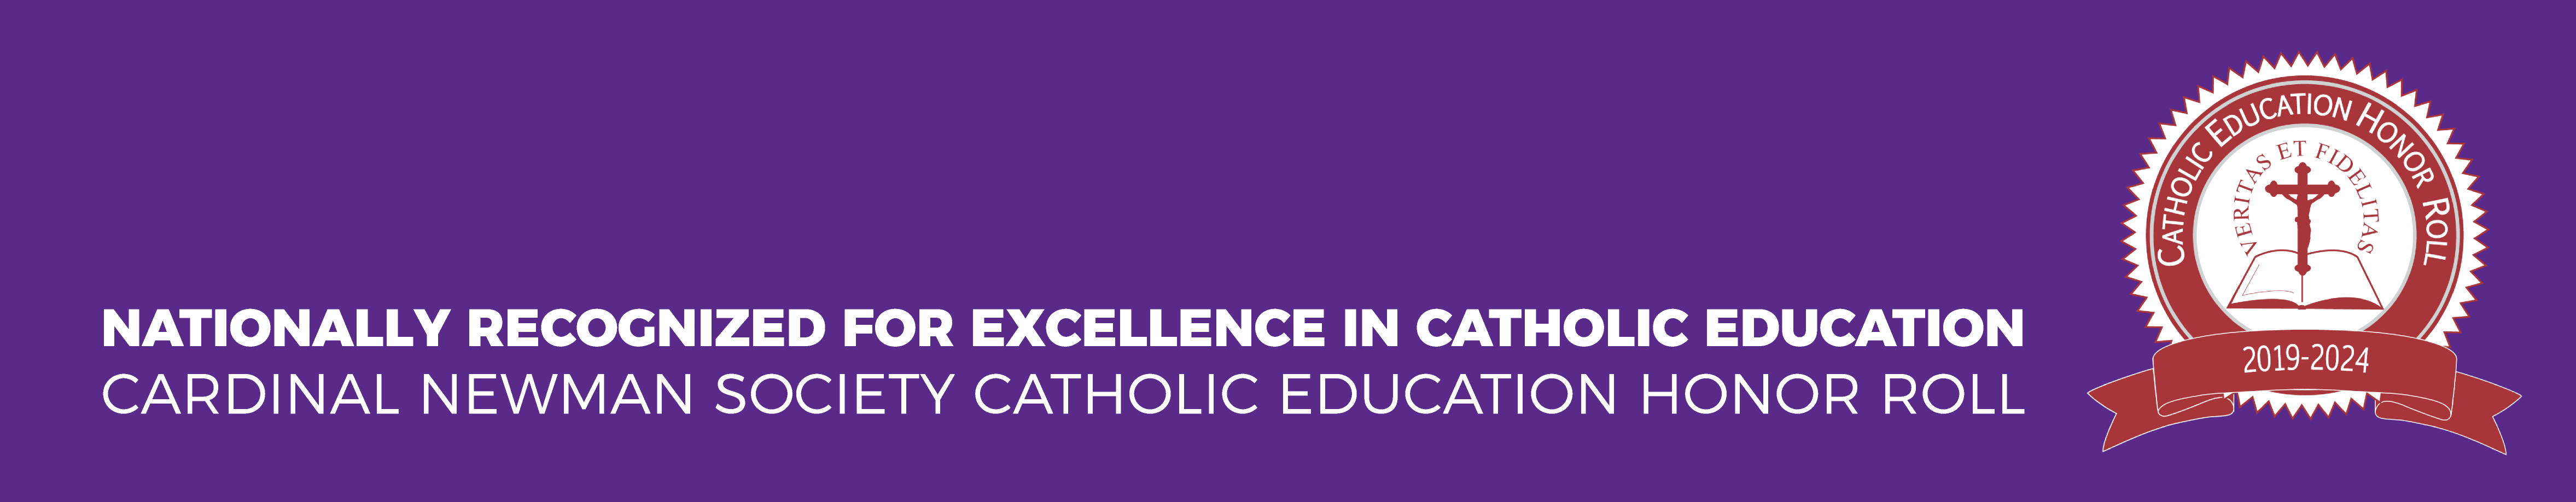 Cardinal Newman Society Catholic Education Honor Roll